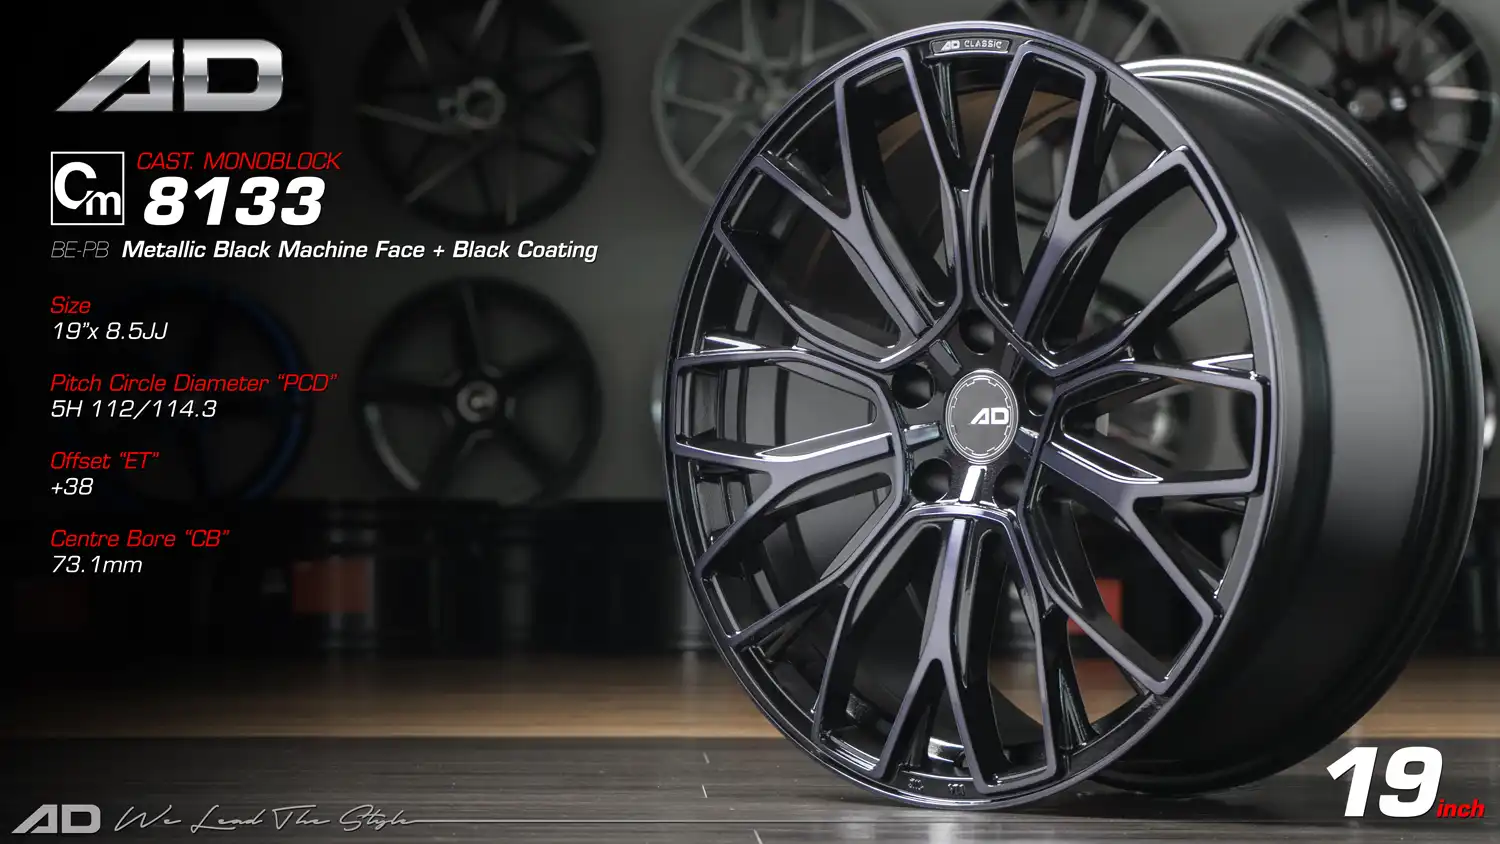 Ad wheels | Cast Monoblock 8133 19 inch 5H112/114.3